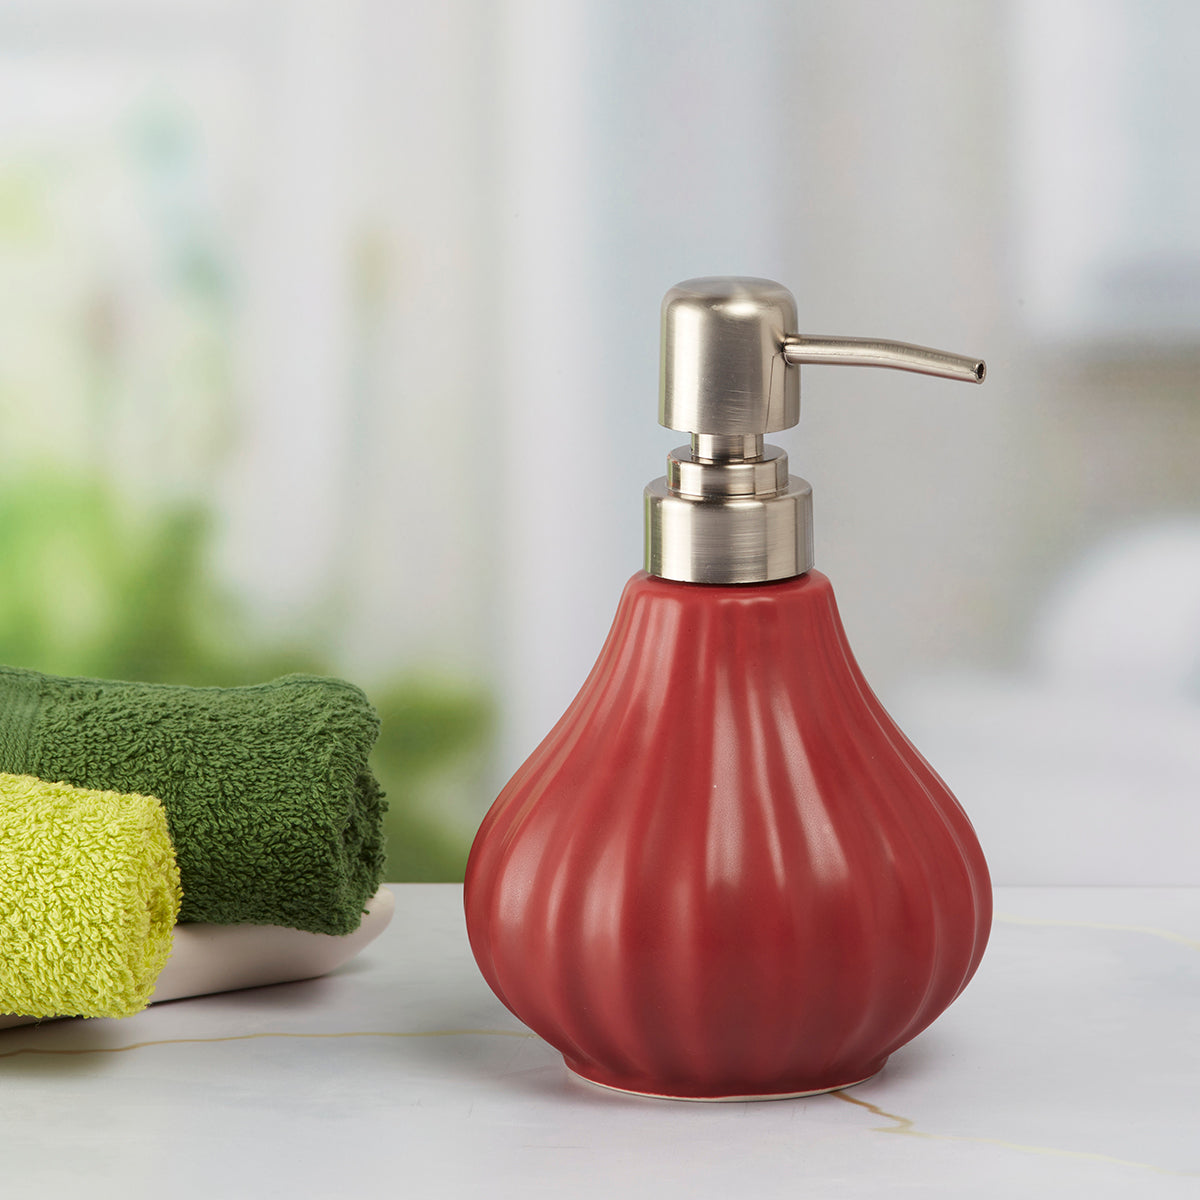 Ceramic Soap Dispenser handwash Pump for Bathroom, Set of 1, Red (8646)